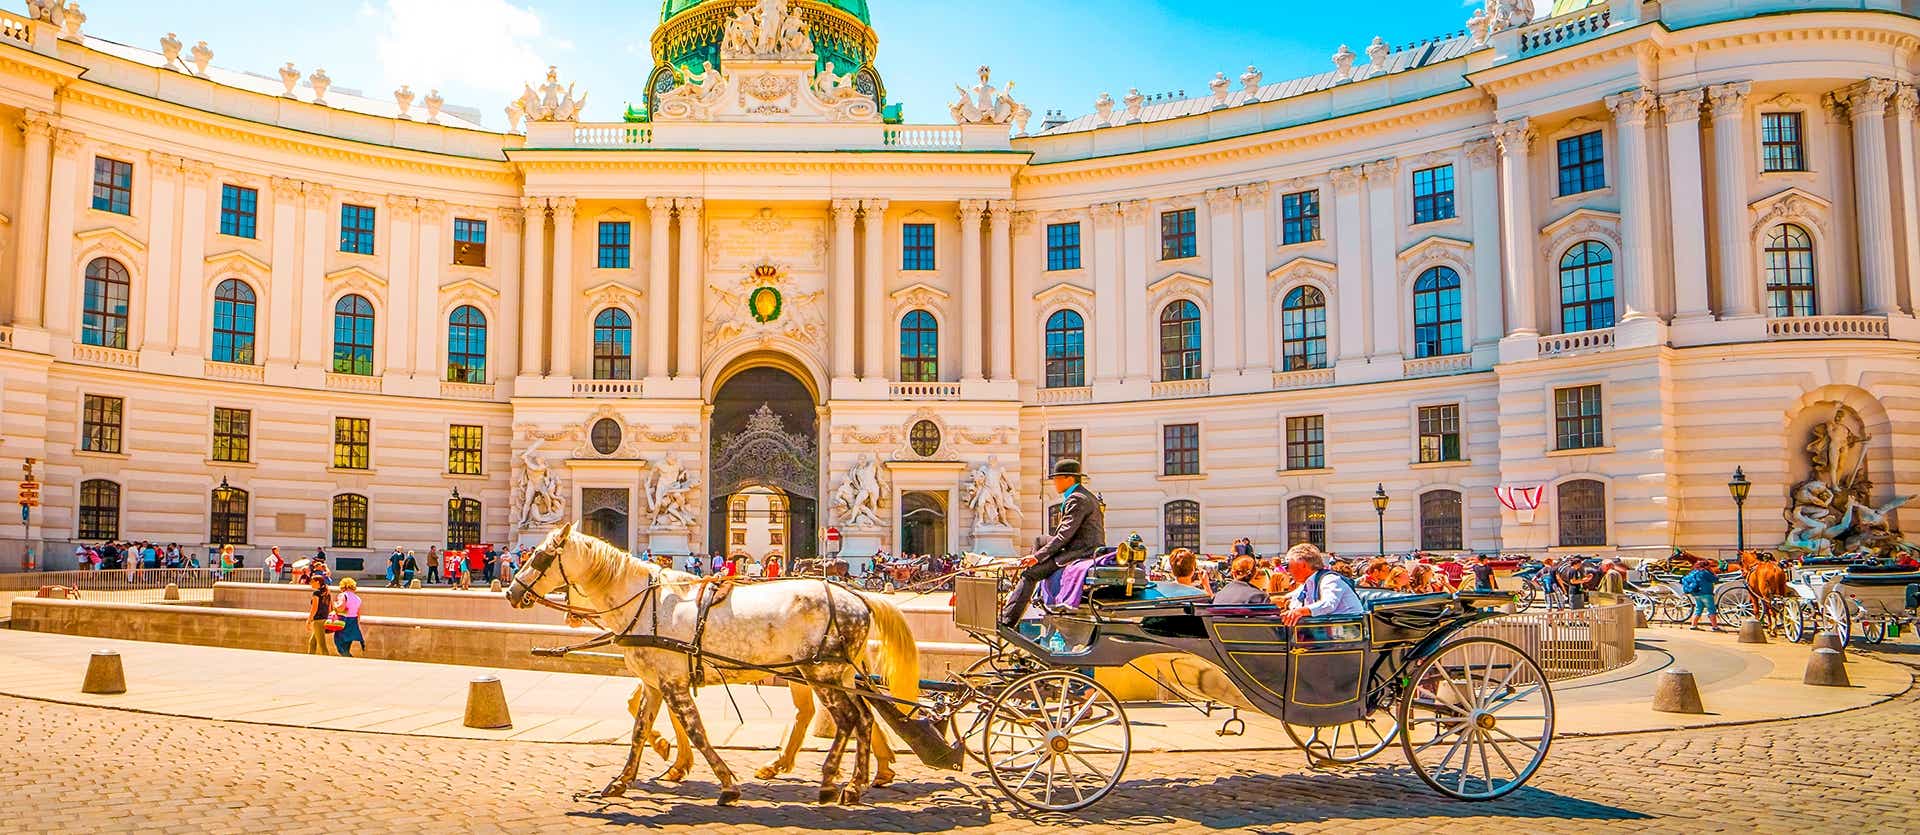 Palacio Imperial de Hofburg <span class="iconos separador"></span> Viena <span class="iconos separador"></span> Austria